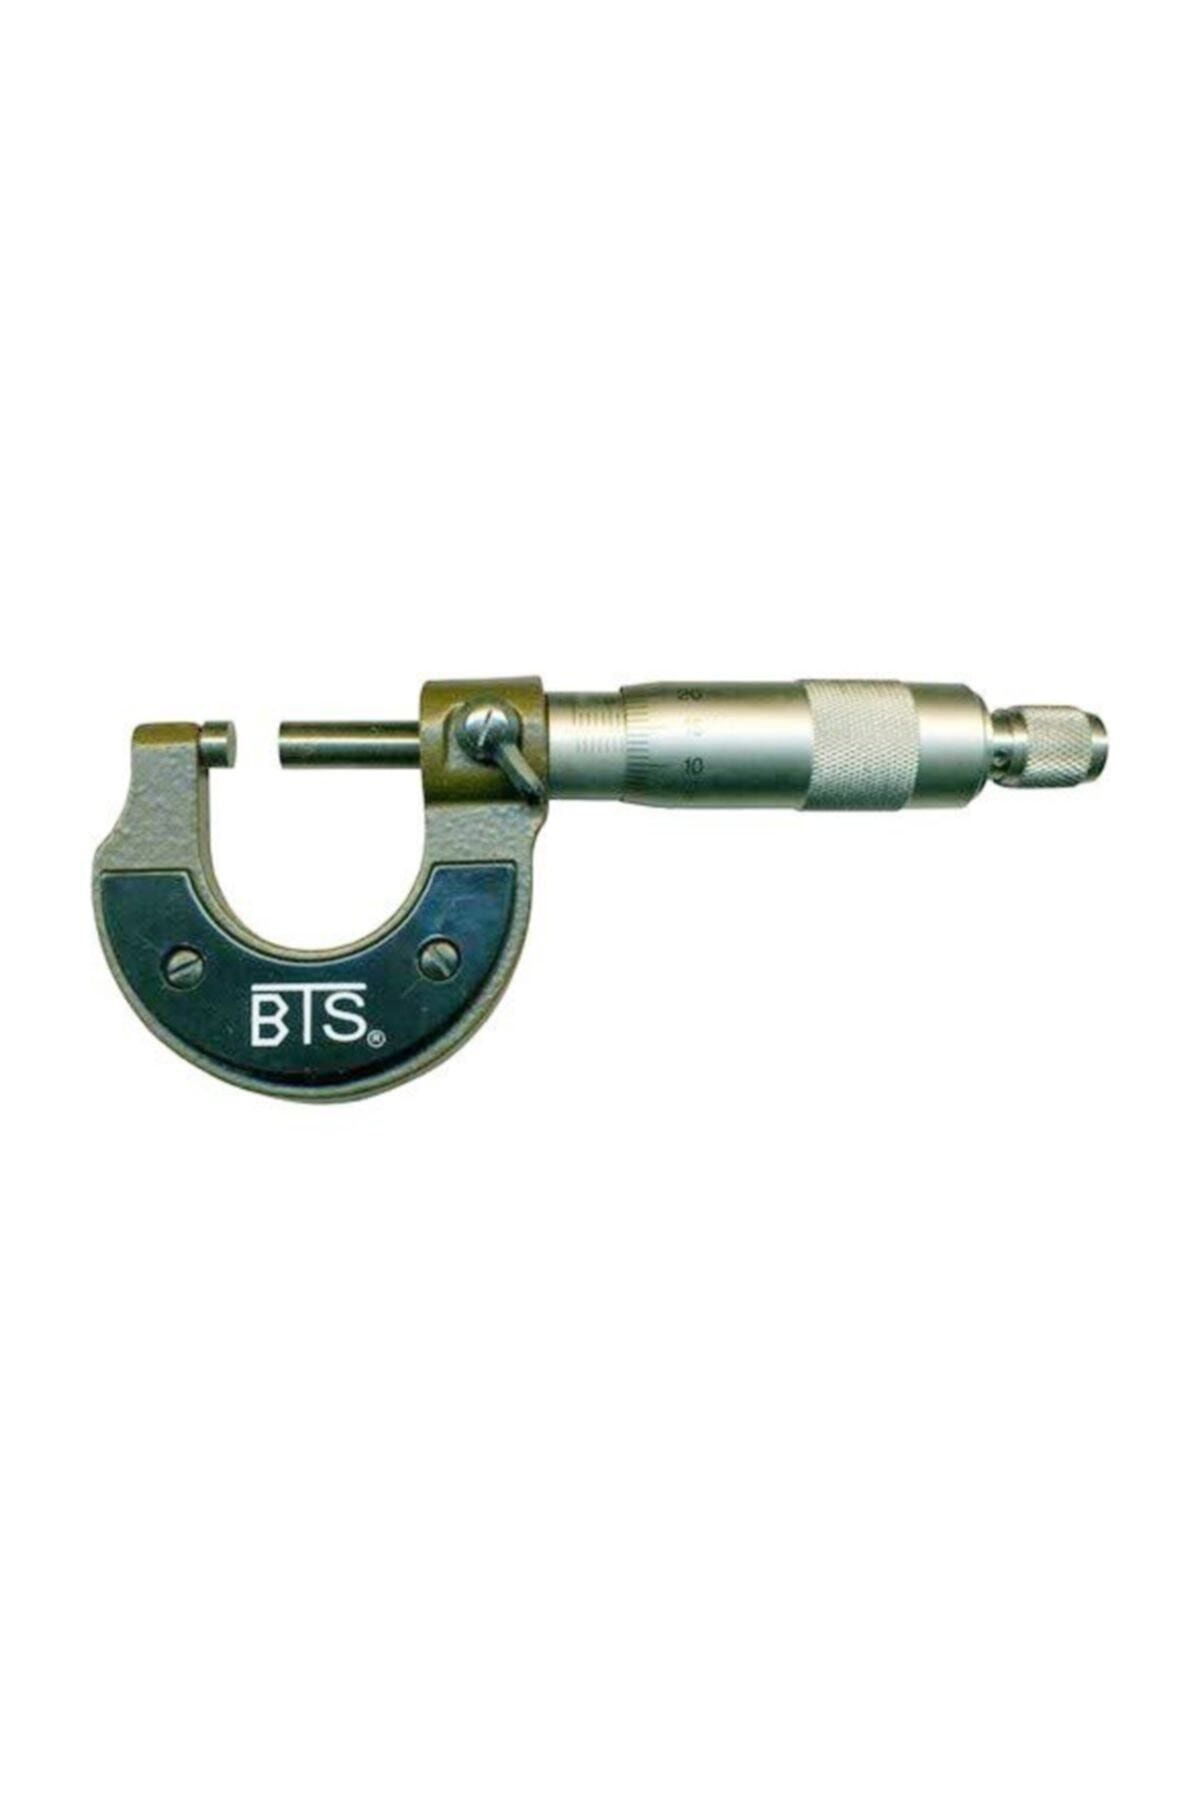 BTS 12051 Mikrometre 0-25mm 0.01mm